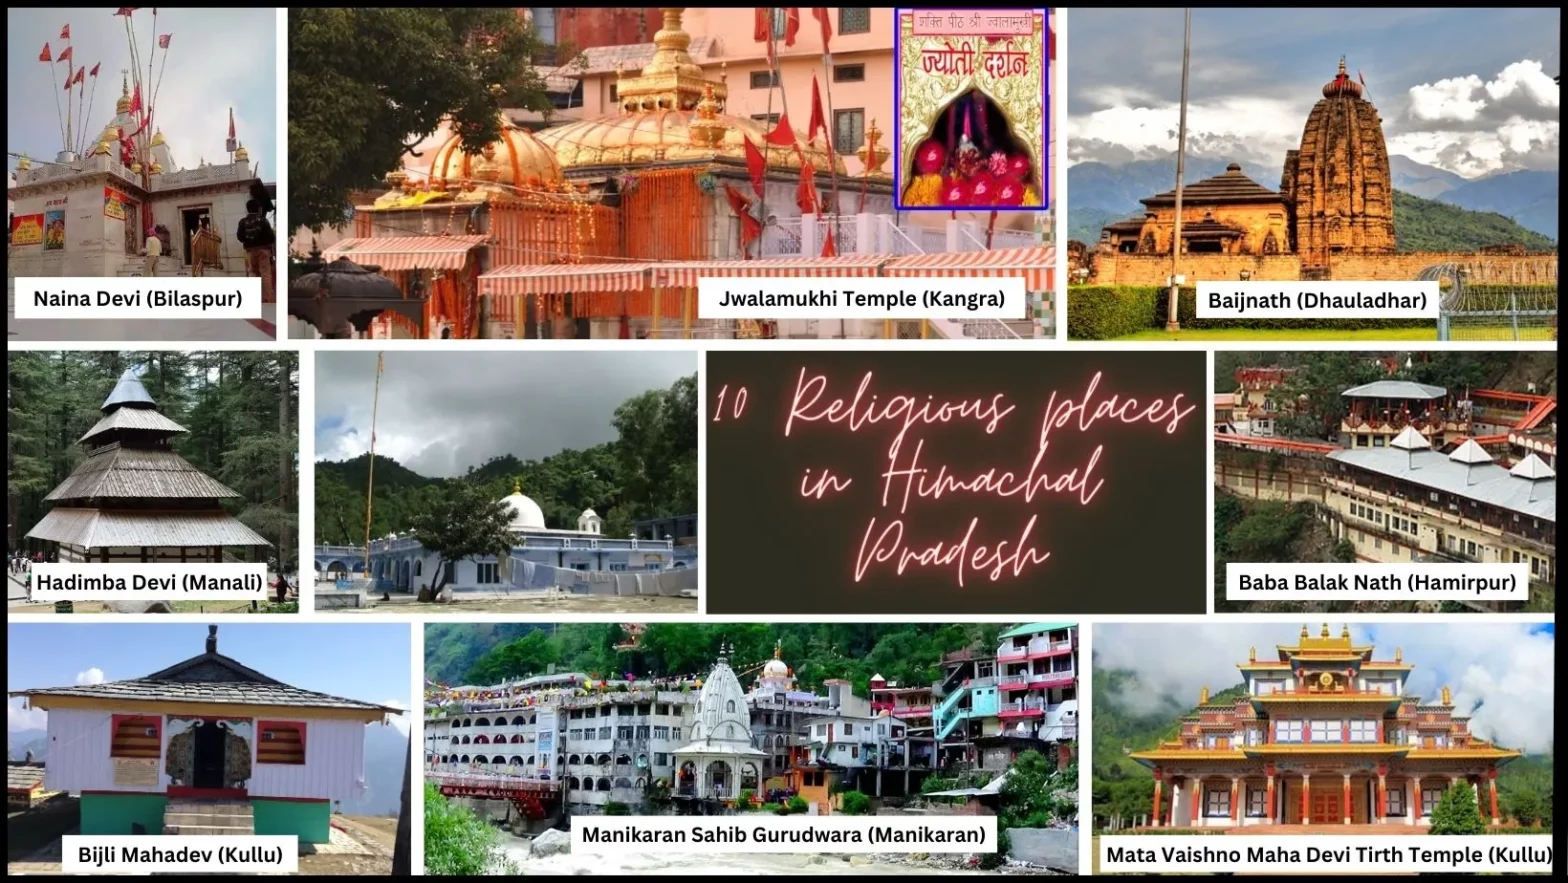 10 Religious places in Himachal Pradesh